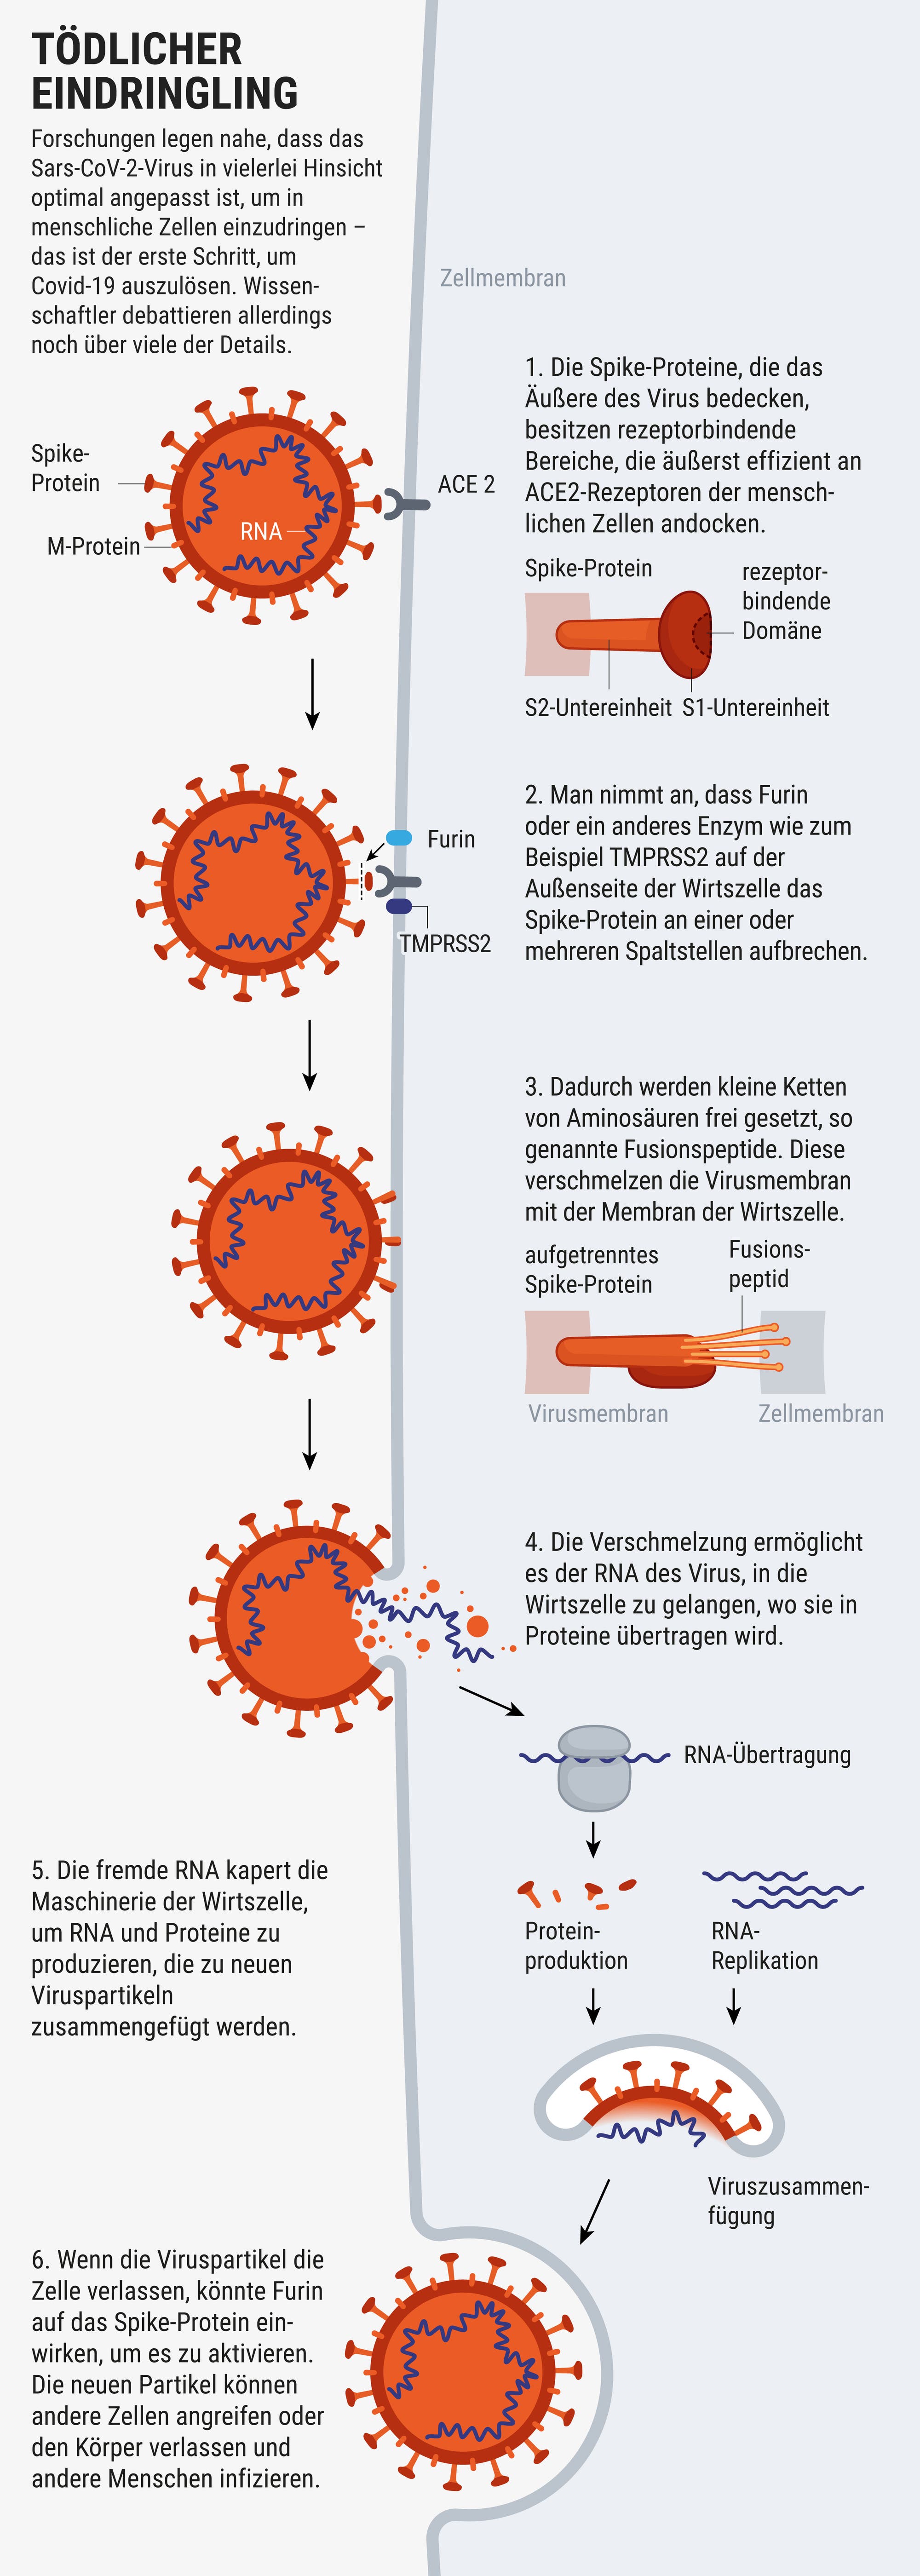 Die Grafik zeigt, wie das Virus in Zellen eindringt.